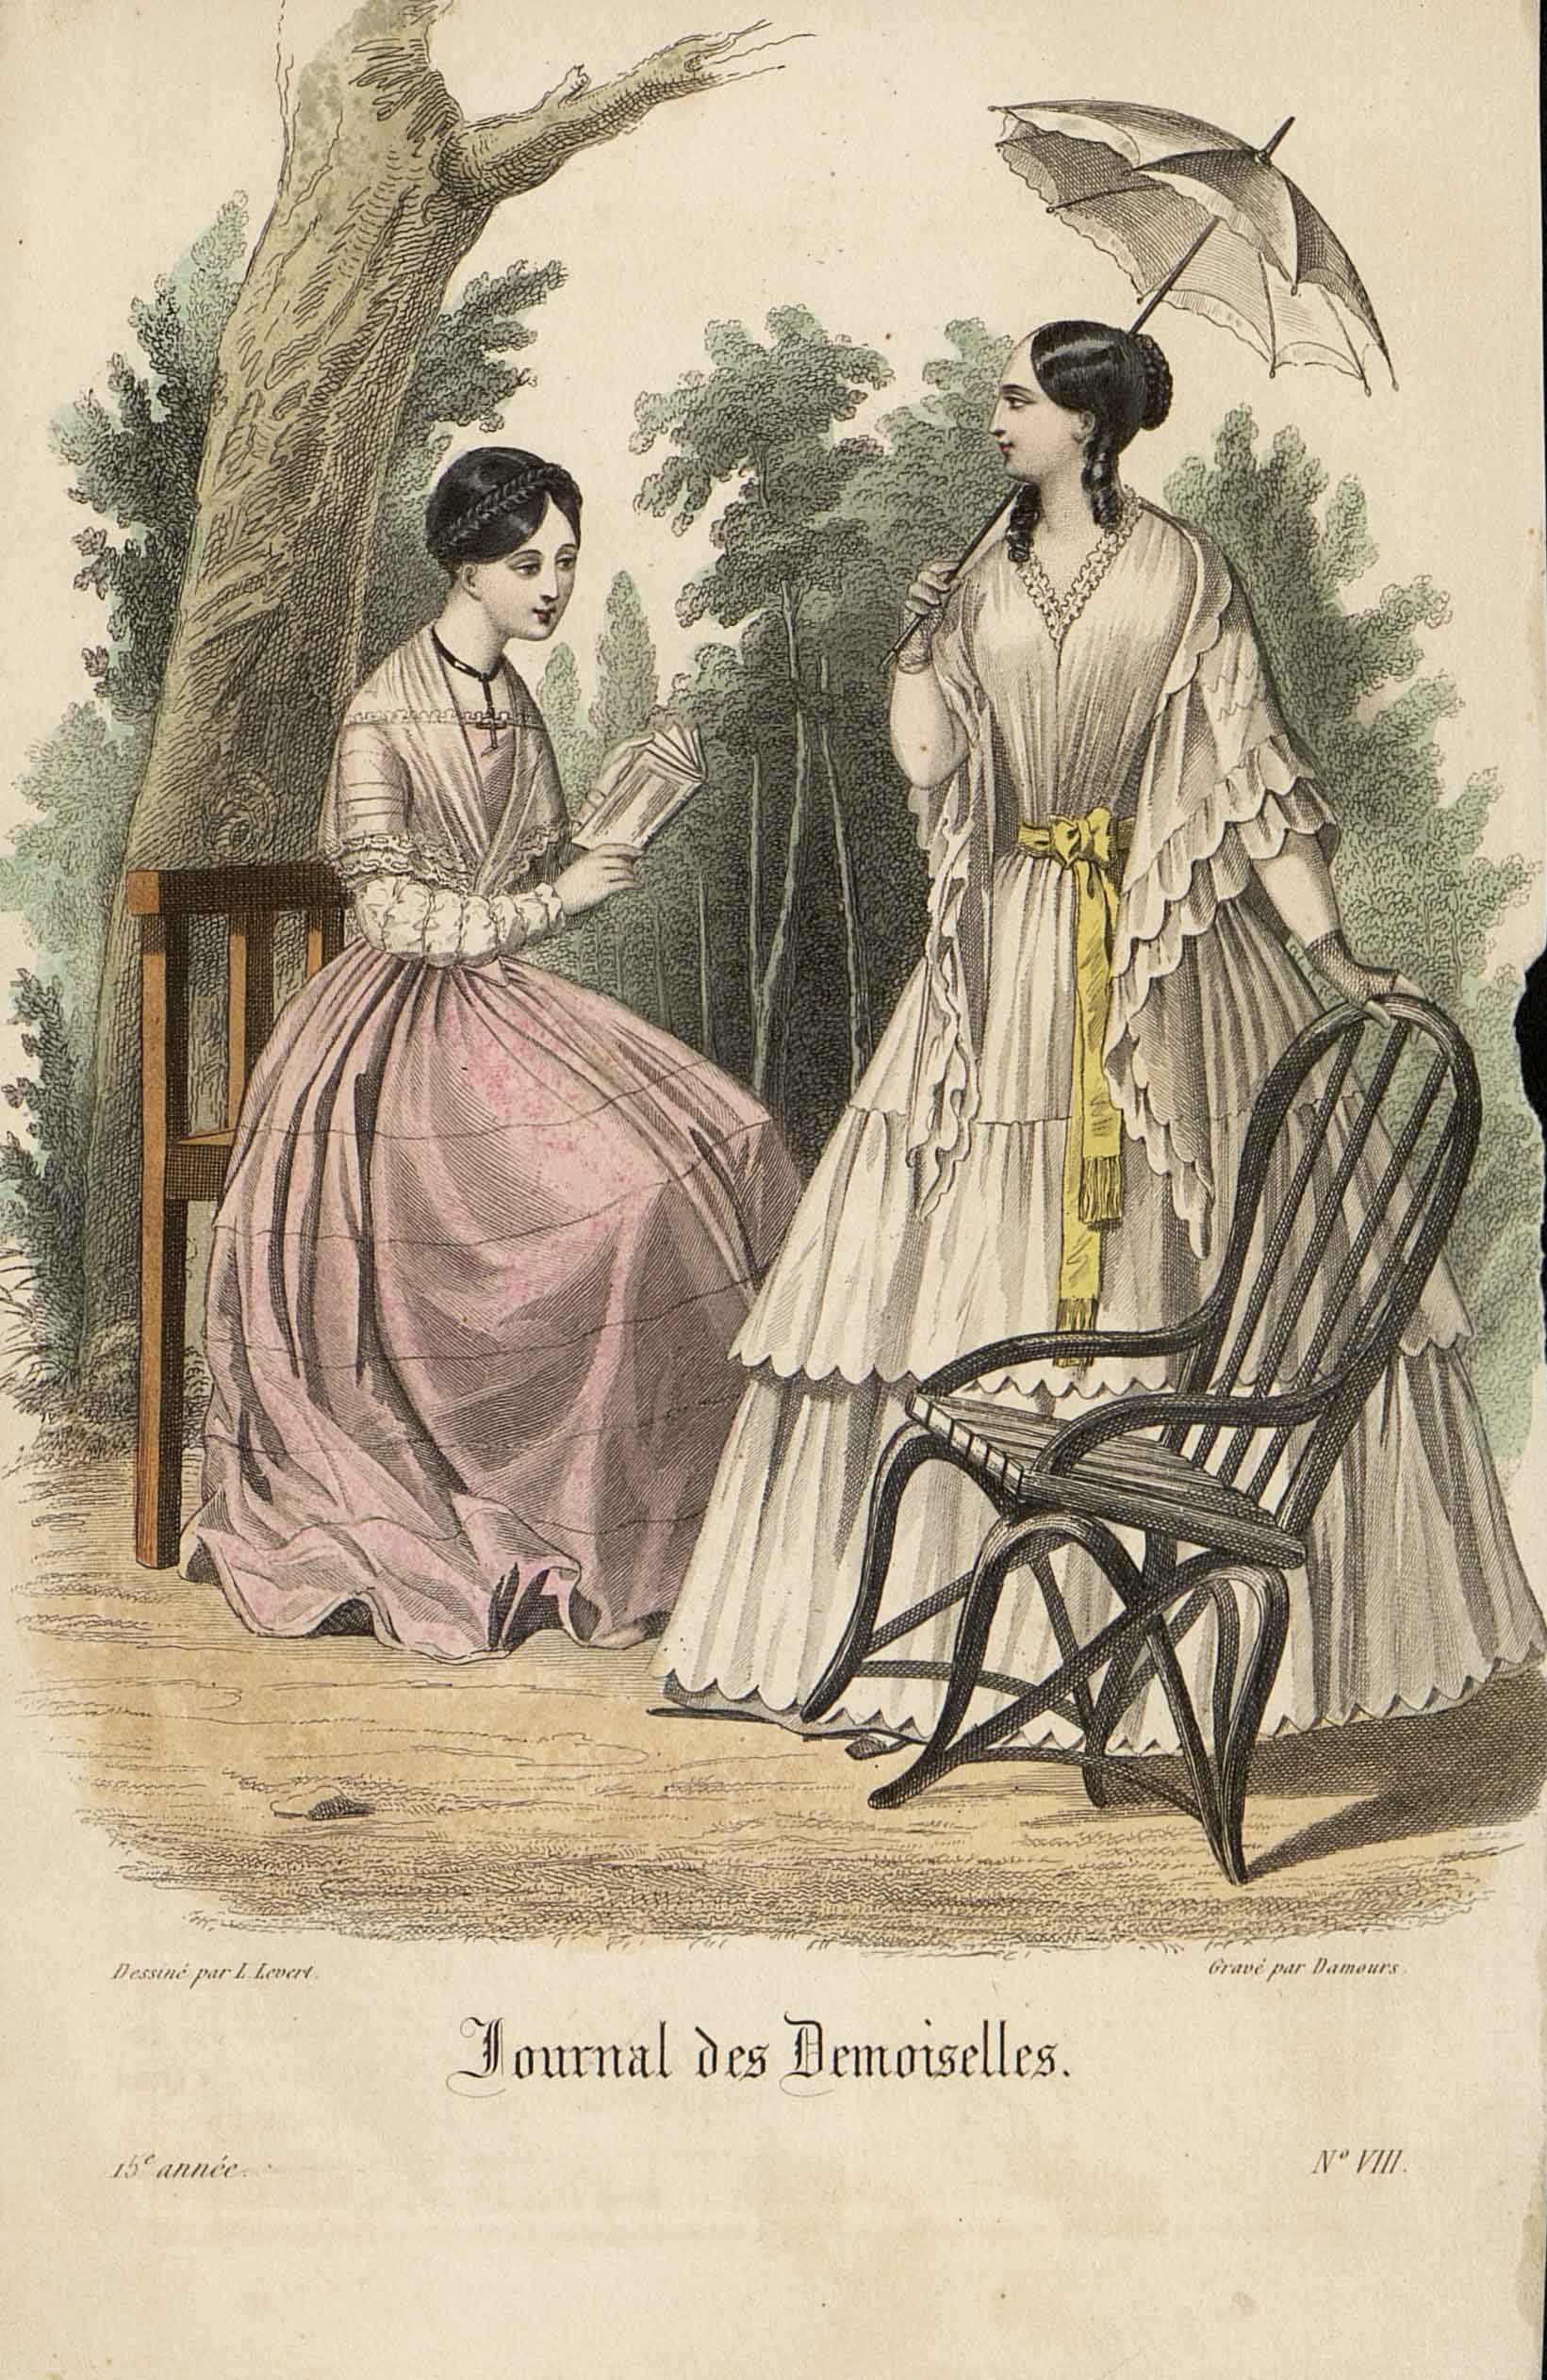 Два модных дамских костюма. Лист из журнала «Les Modes Parisiennes». Париж.1848